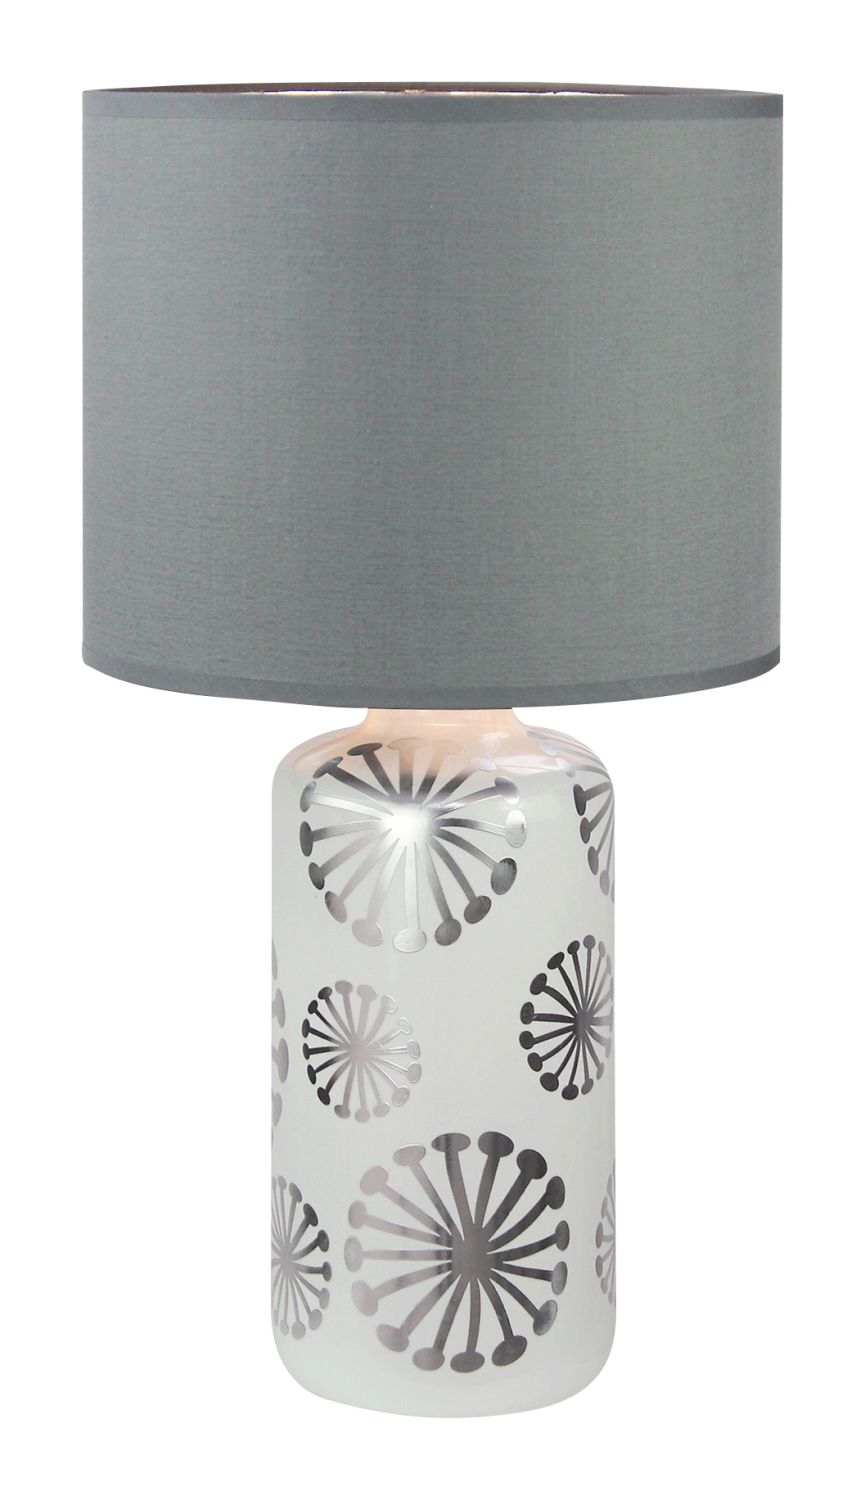 Nachttischlampe Grau Silber Schalter E27 blendarm